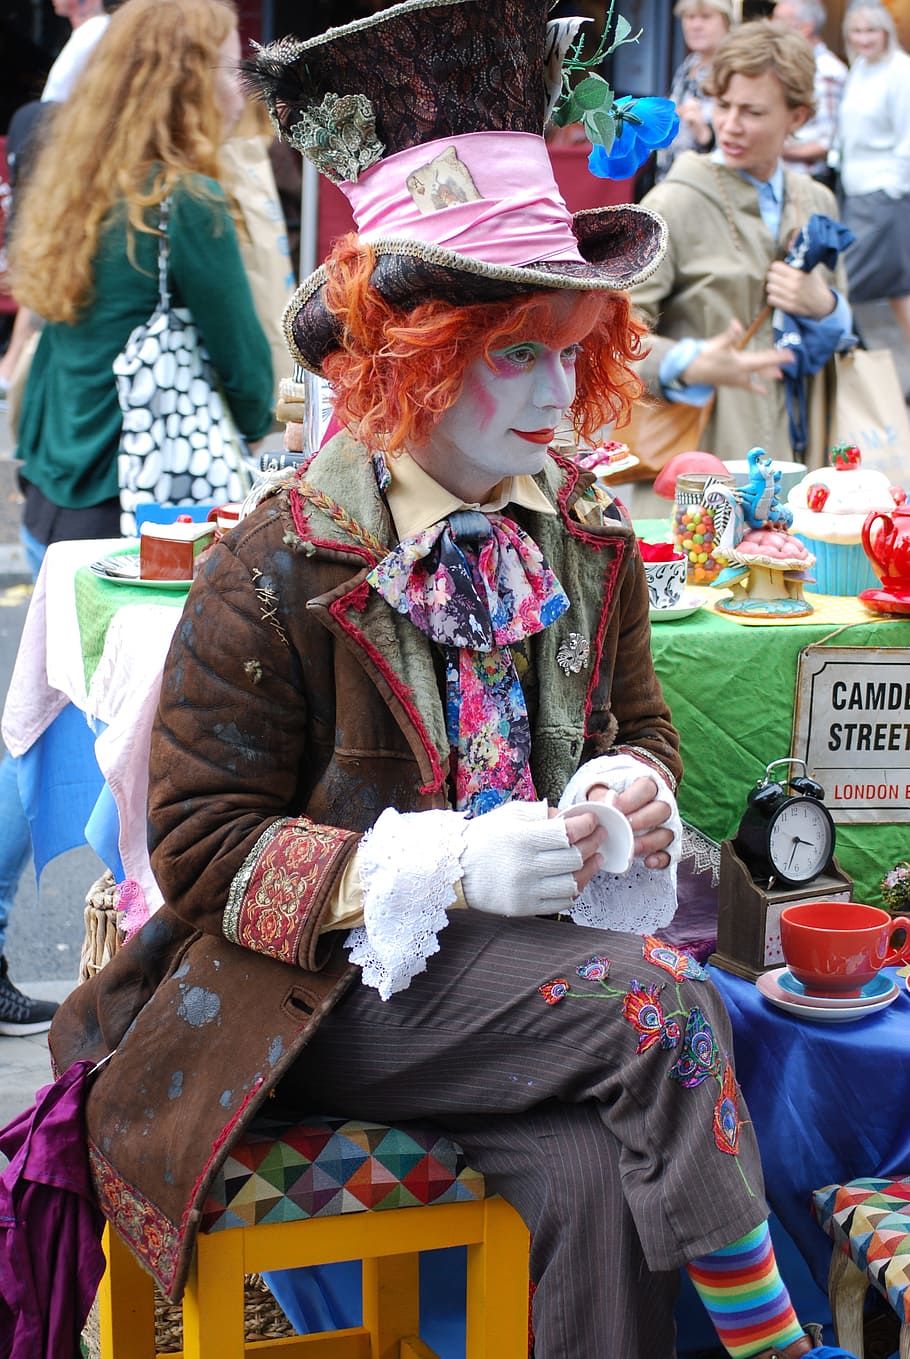 clown costume, colors, alice, hatter, london, feast, clown, trick, mask, face